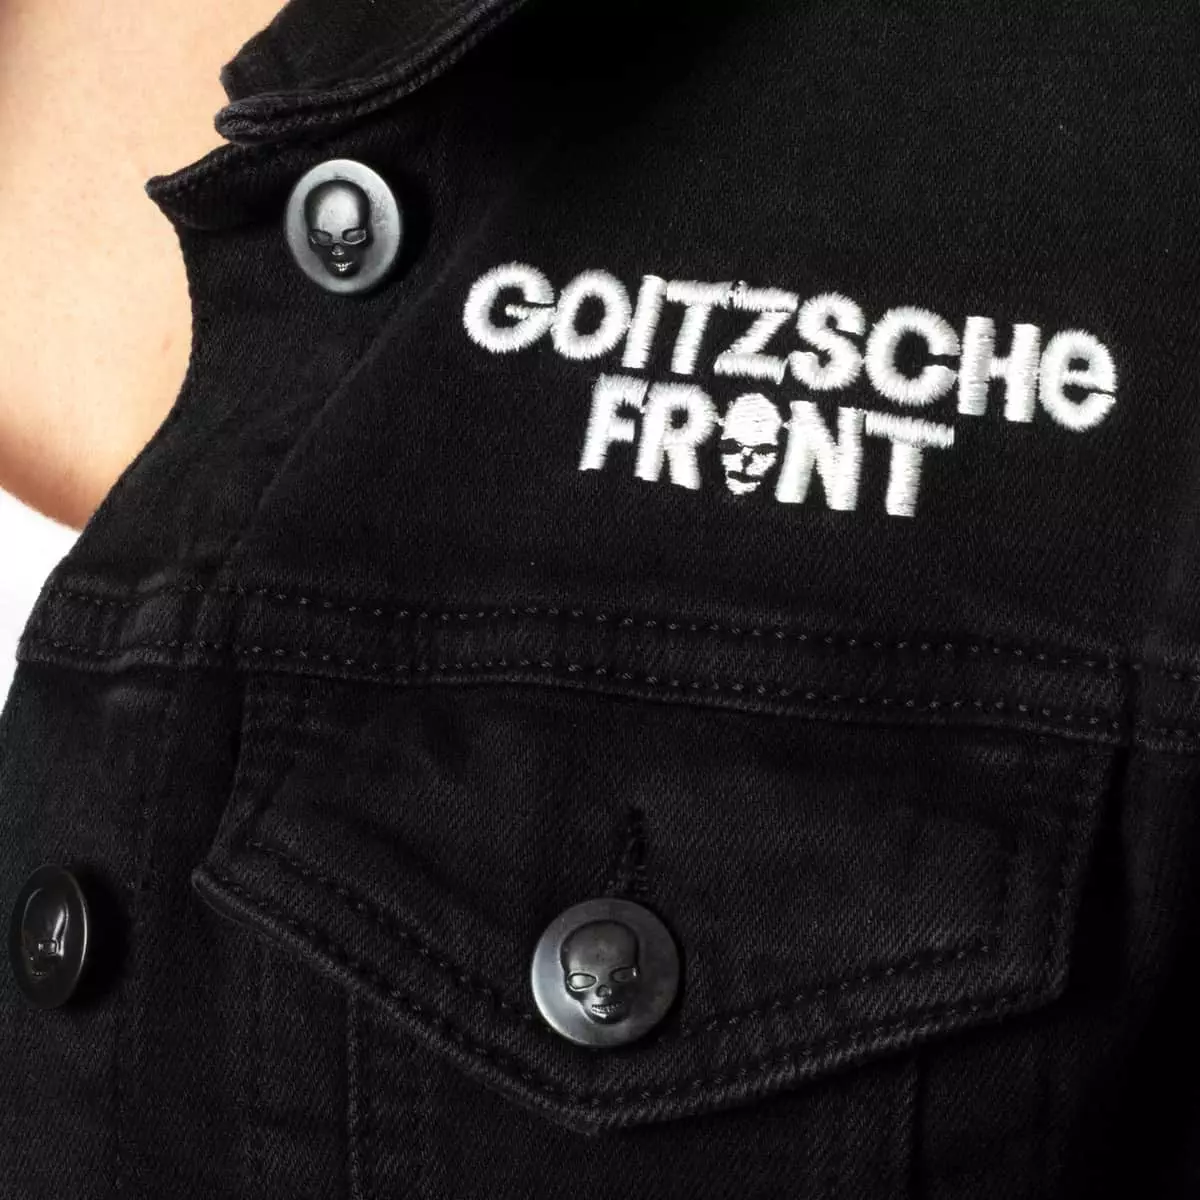 Goitzsche Jacke - Front\